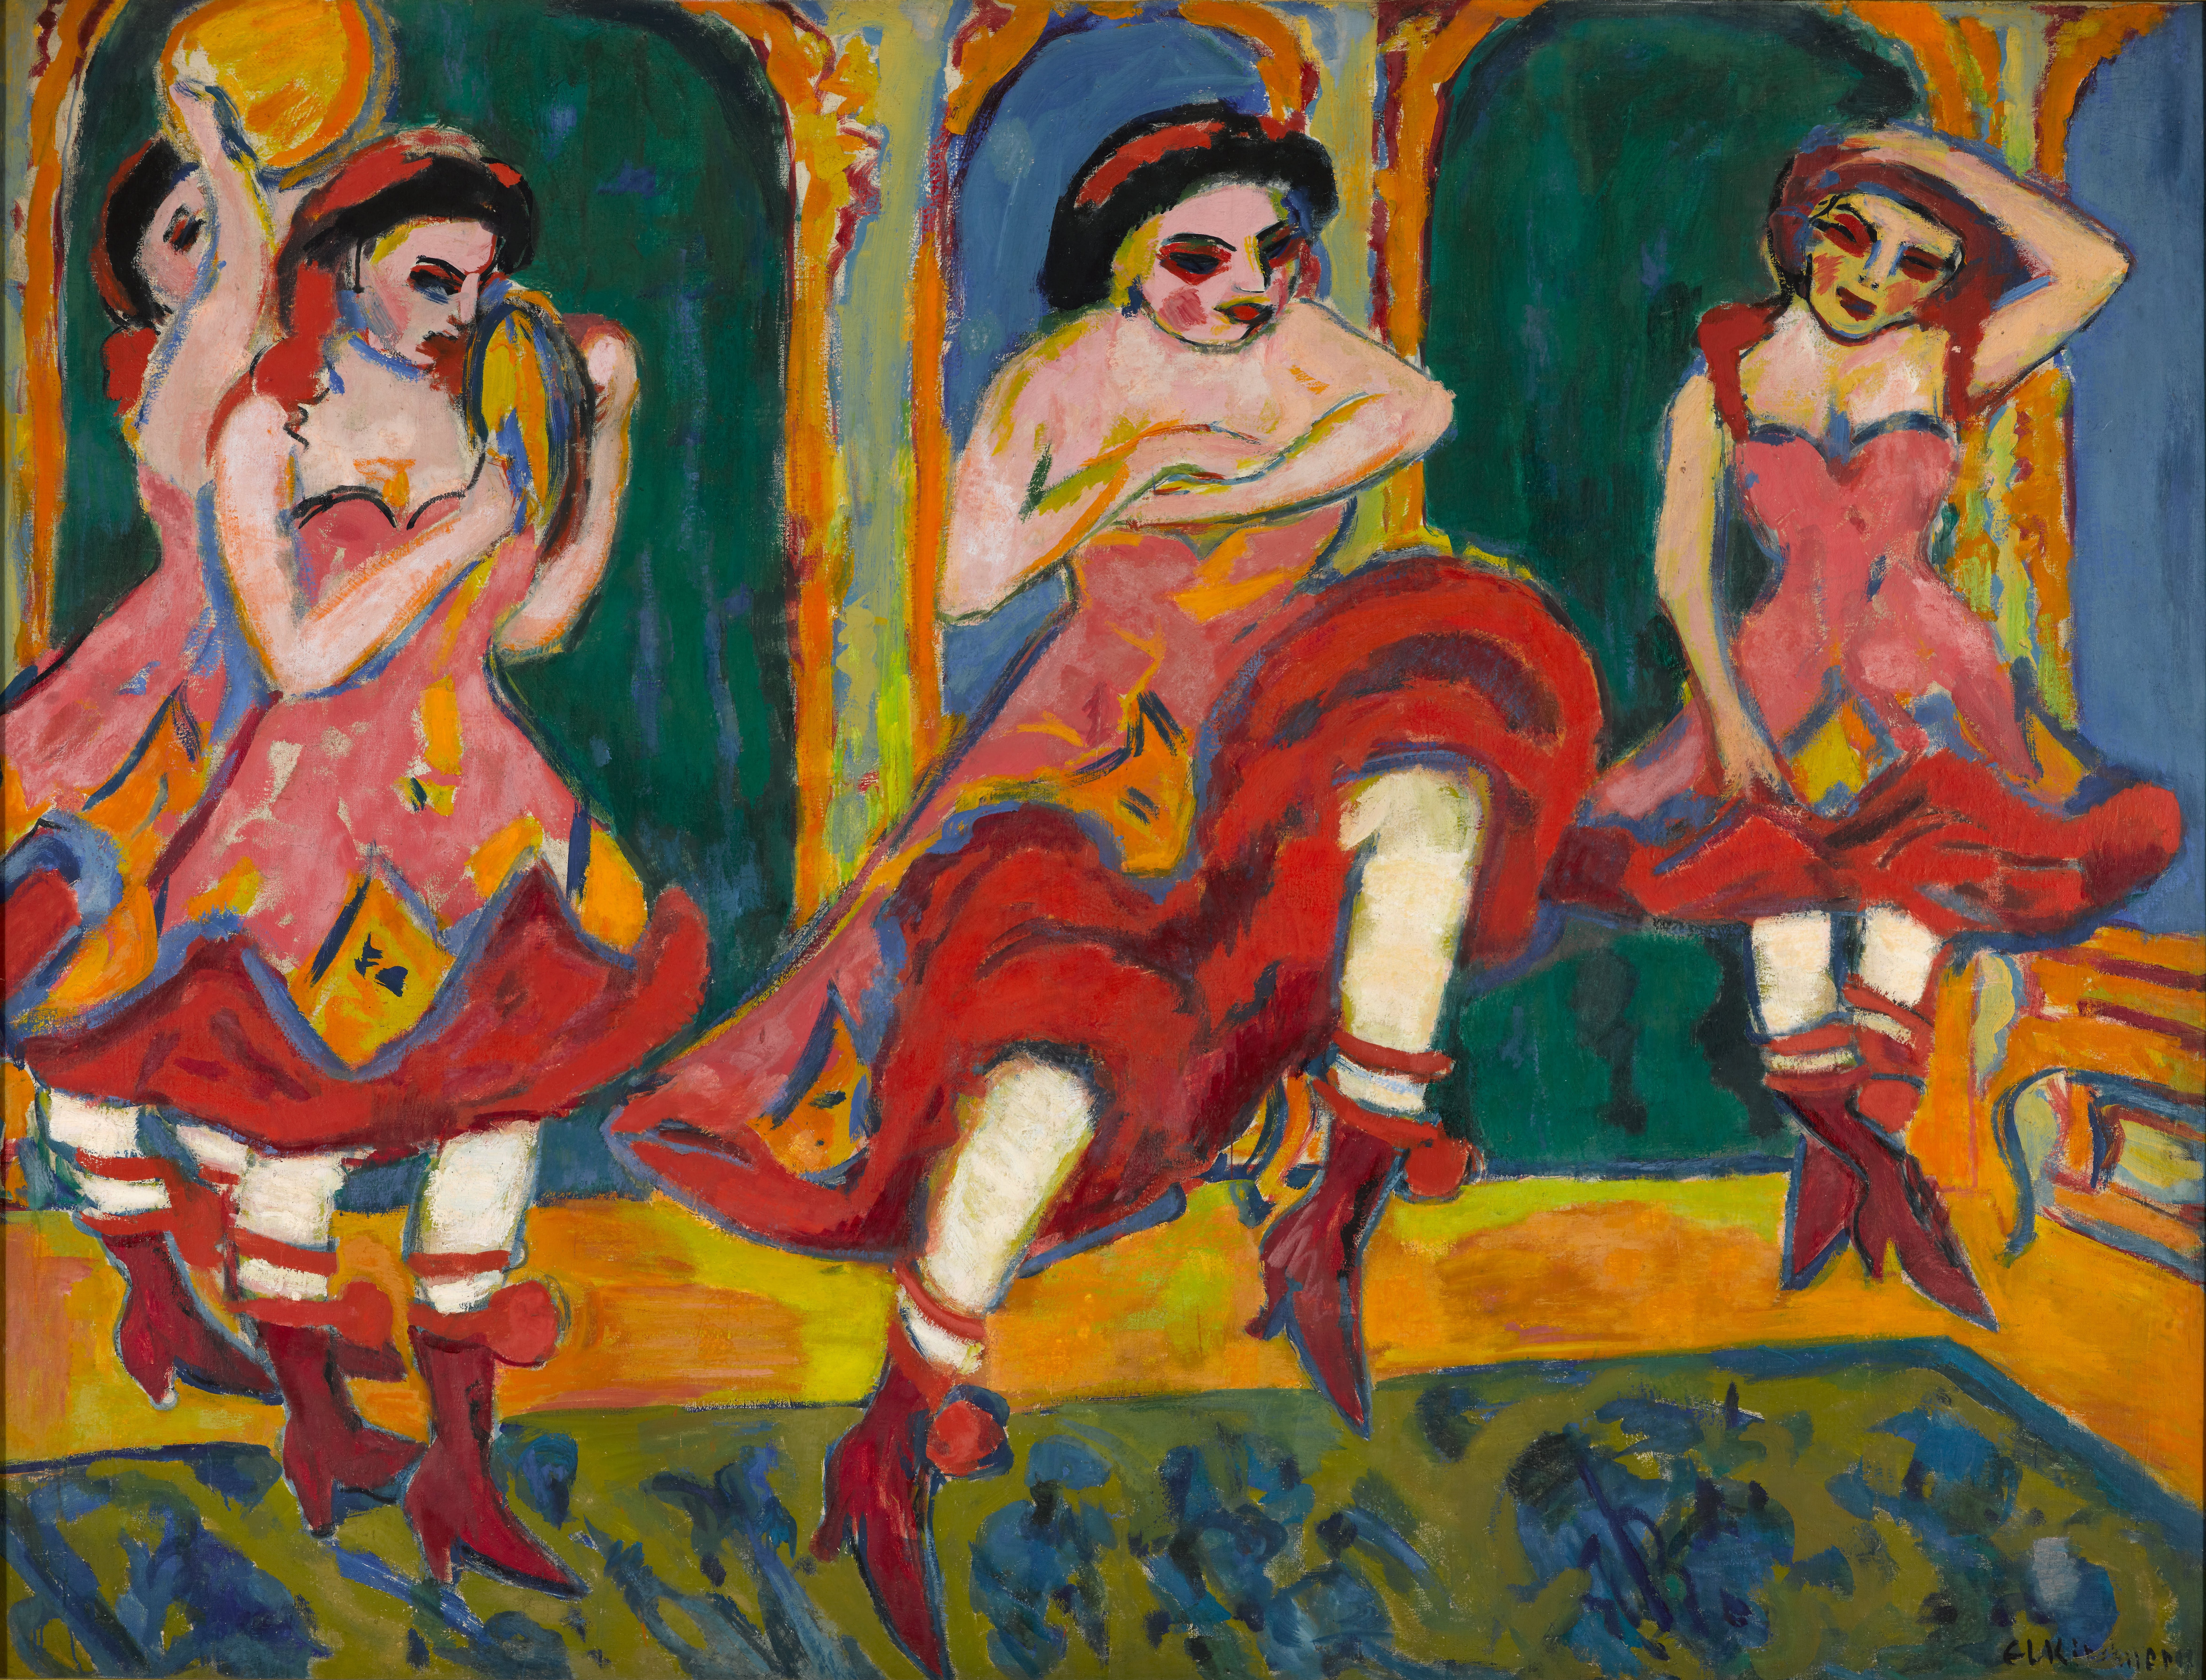 Outra pintura de Kirchner chamada dançarinos de Czardas